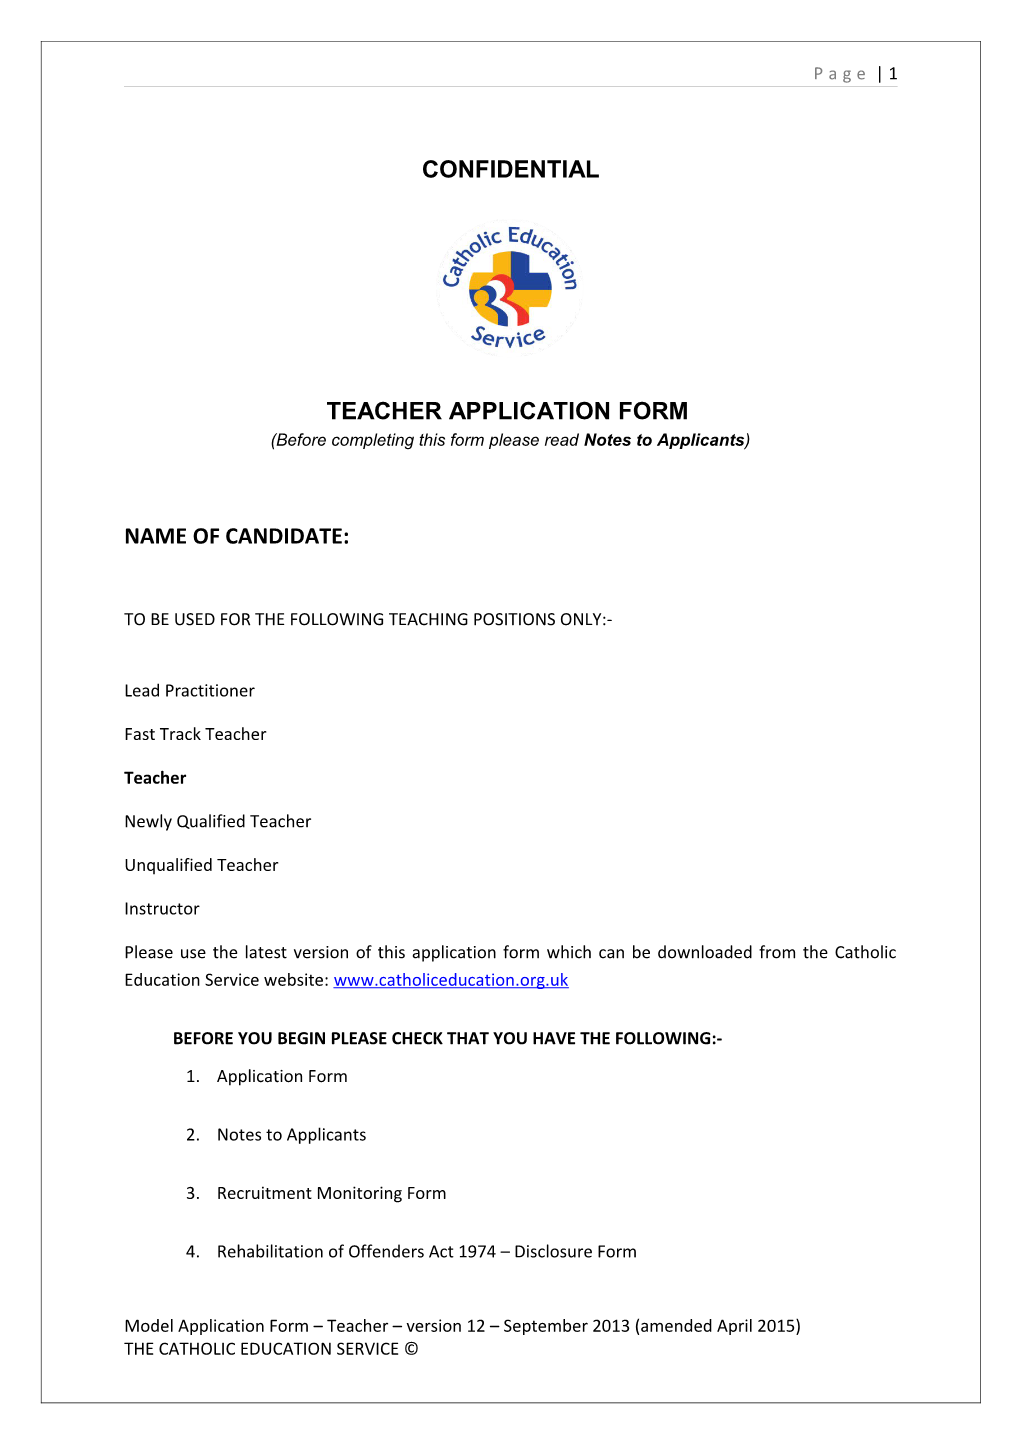 Teacher Application Form s1